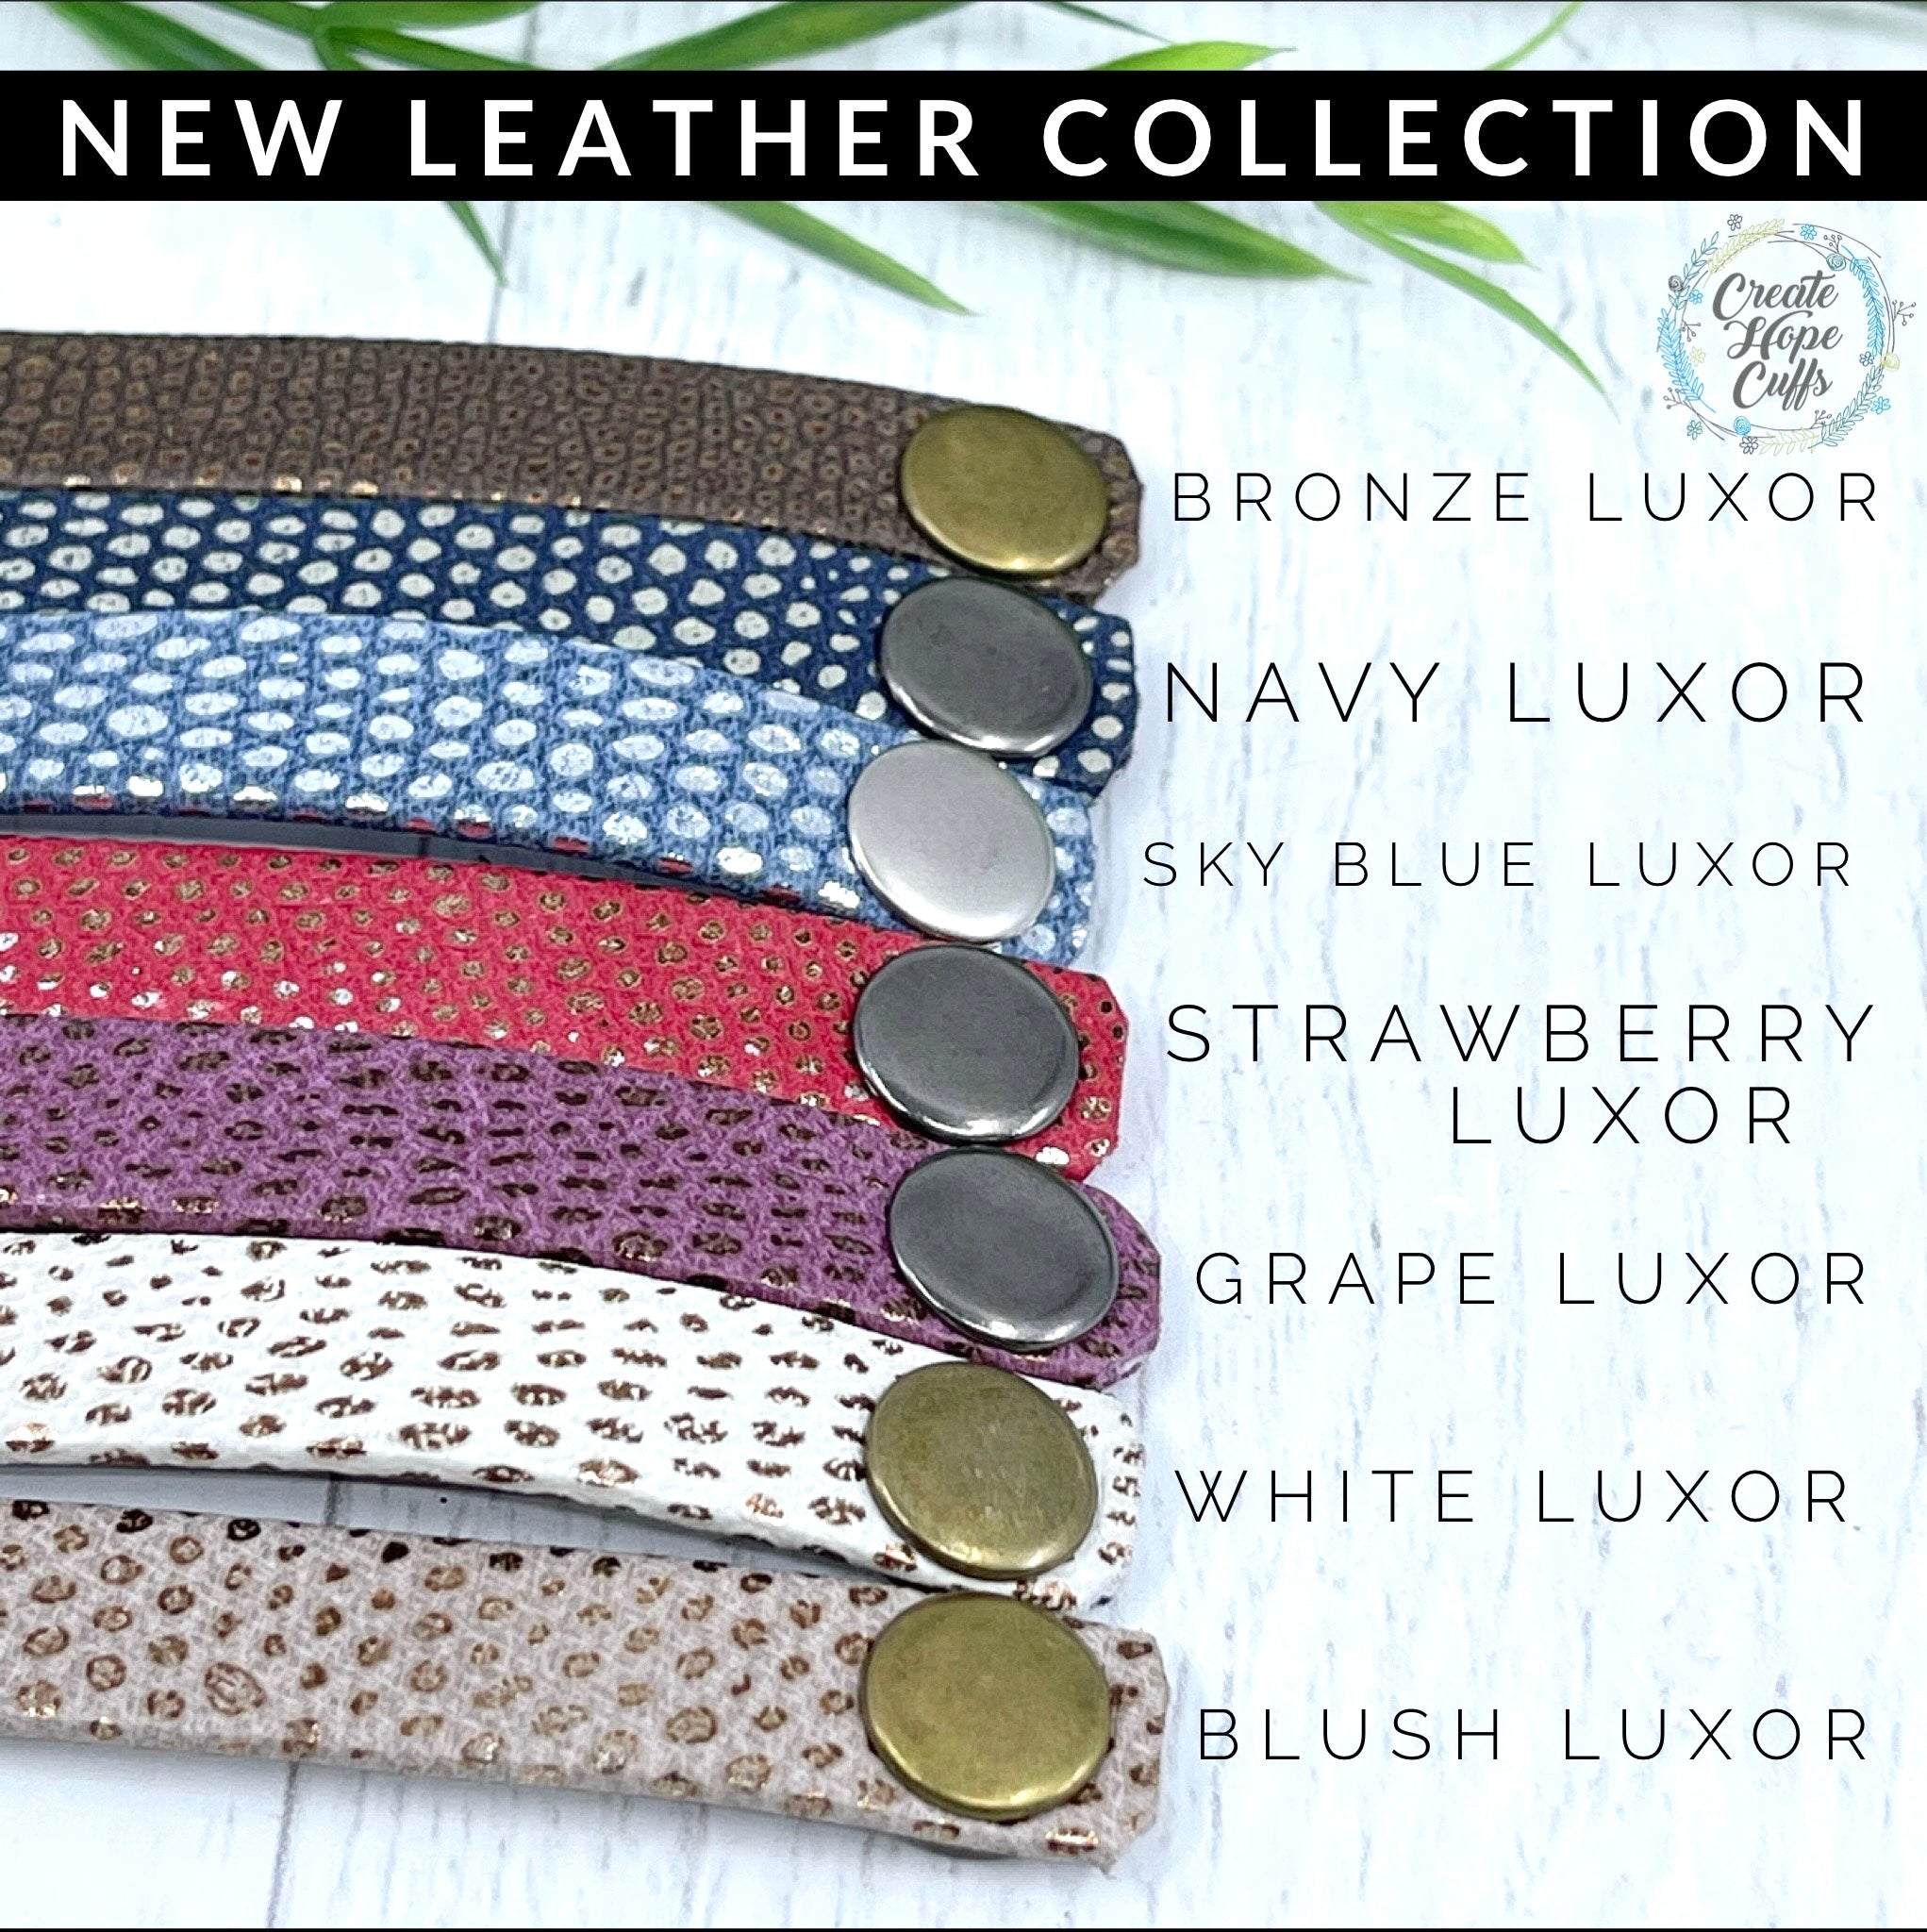 Luxor Skinny Leather Bracelet Collection | Women Teens | 12 colors | Adjustable Skinny Bracelets Create Hope Cuffs 